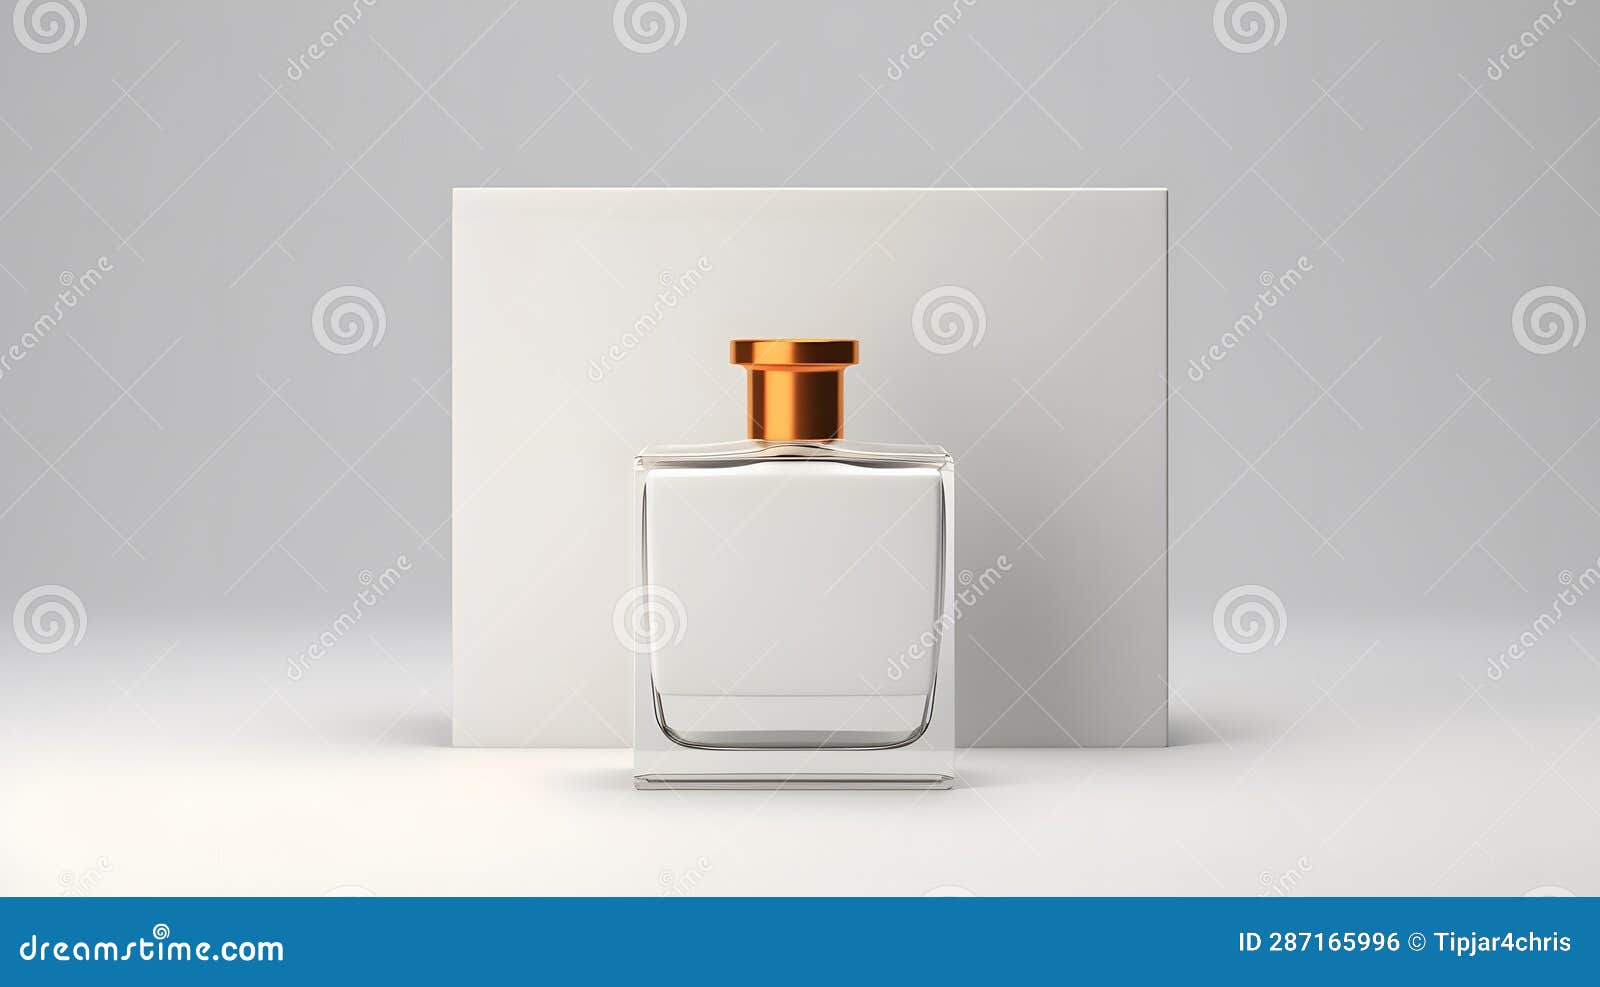 Sleek Perfume Packaging: Minimalistic Bottle Mockup with Label and ...